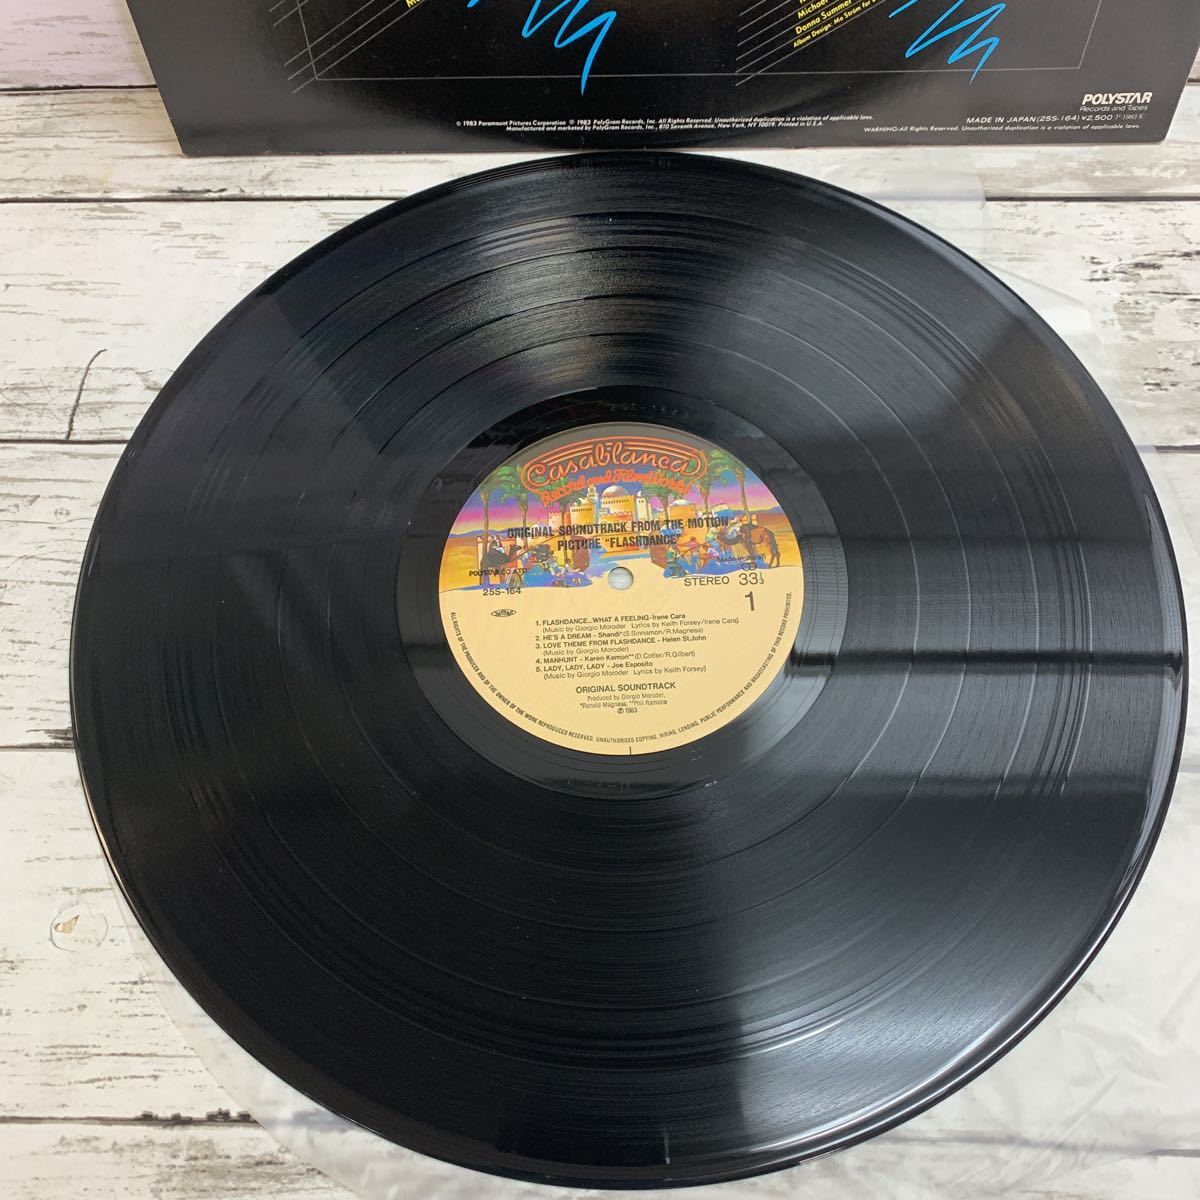 [ secondhand goods ] flash Dance original soundtrack LP record FLASHDANCE ORIGINAL SOUNDTRACK FROM THE MOTION PICTURE 25S-164